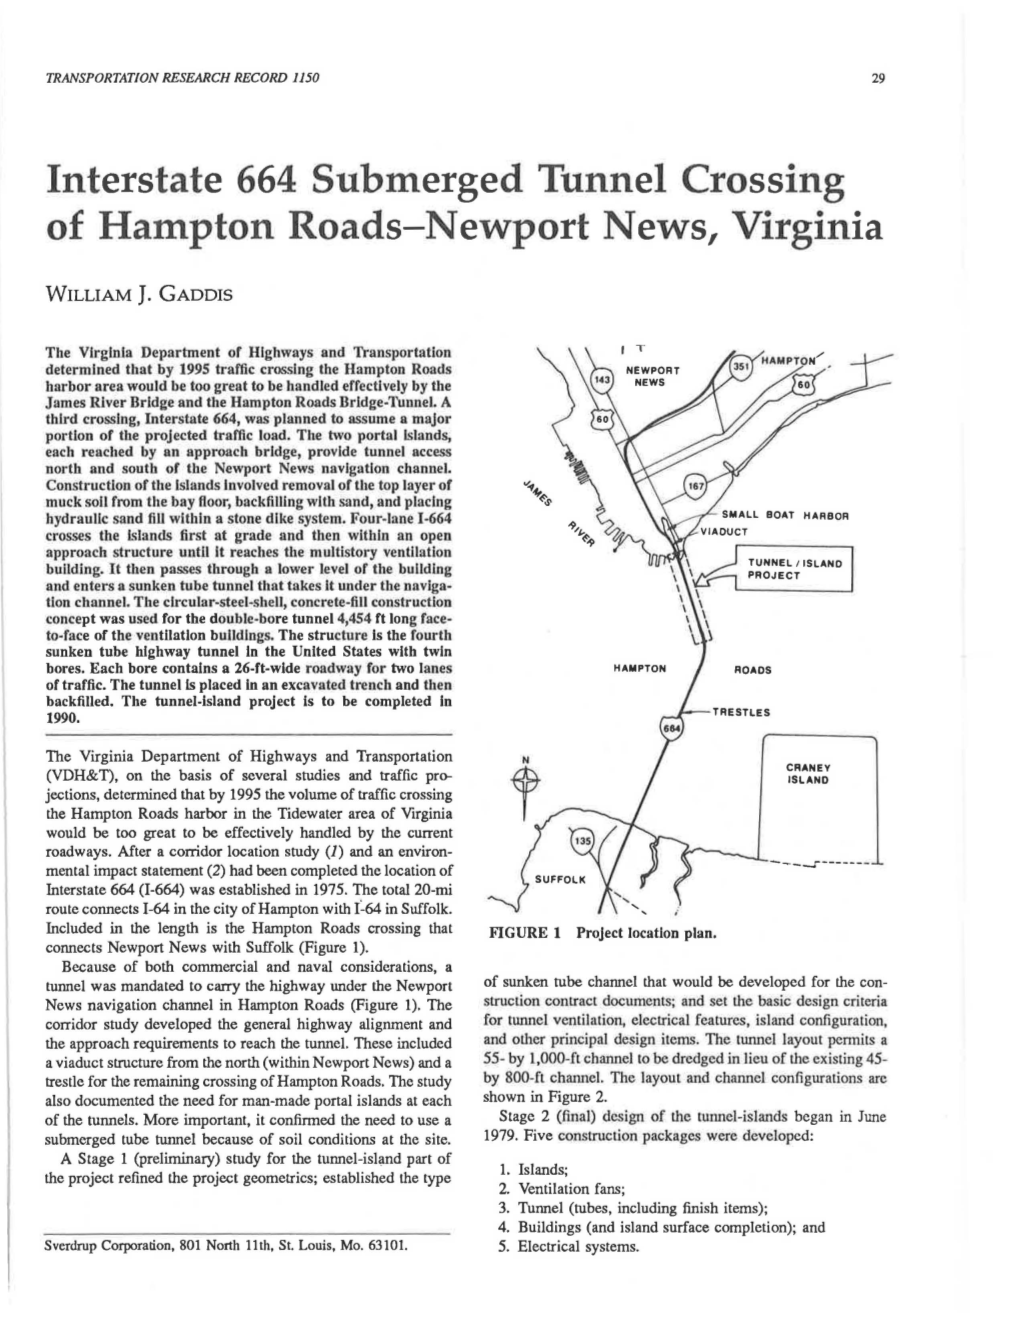 Interstate 664 Submerged Tunnel Crossing of Hampton Roads-Newport News, Virginia